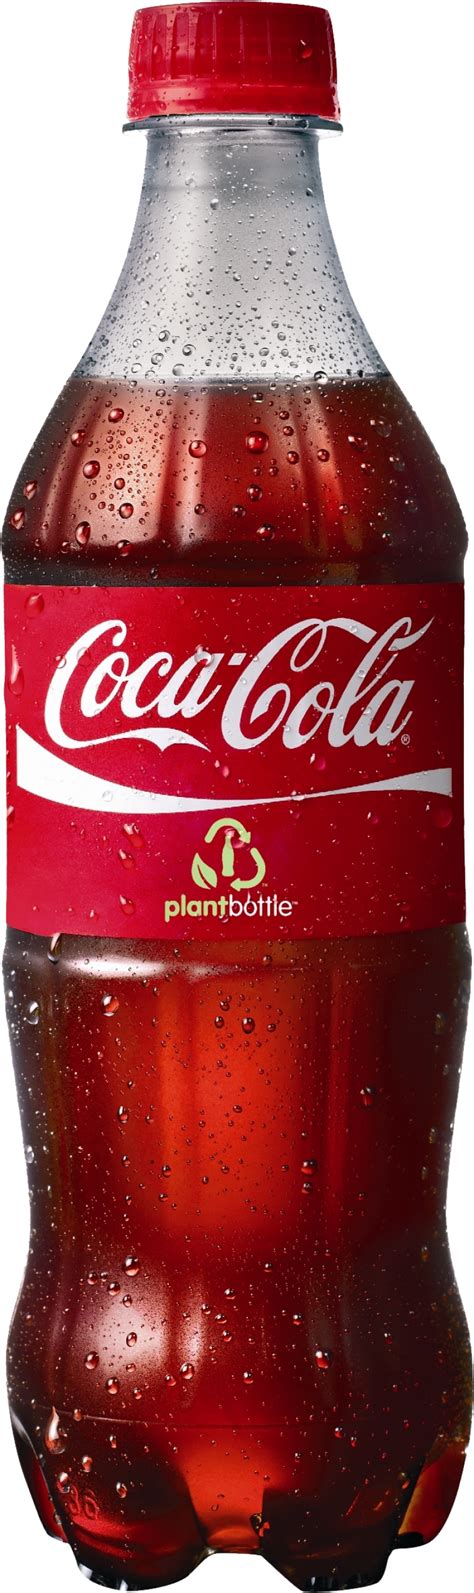 Coca Cola Png Image Purepng Free Transparent Cc0 Png Image Library Images